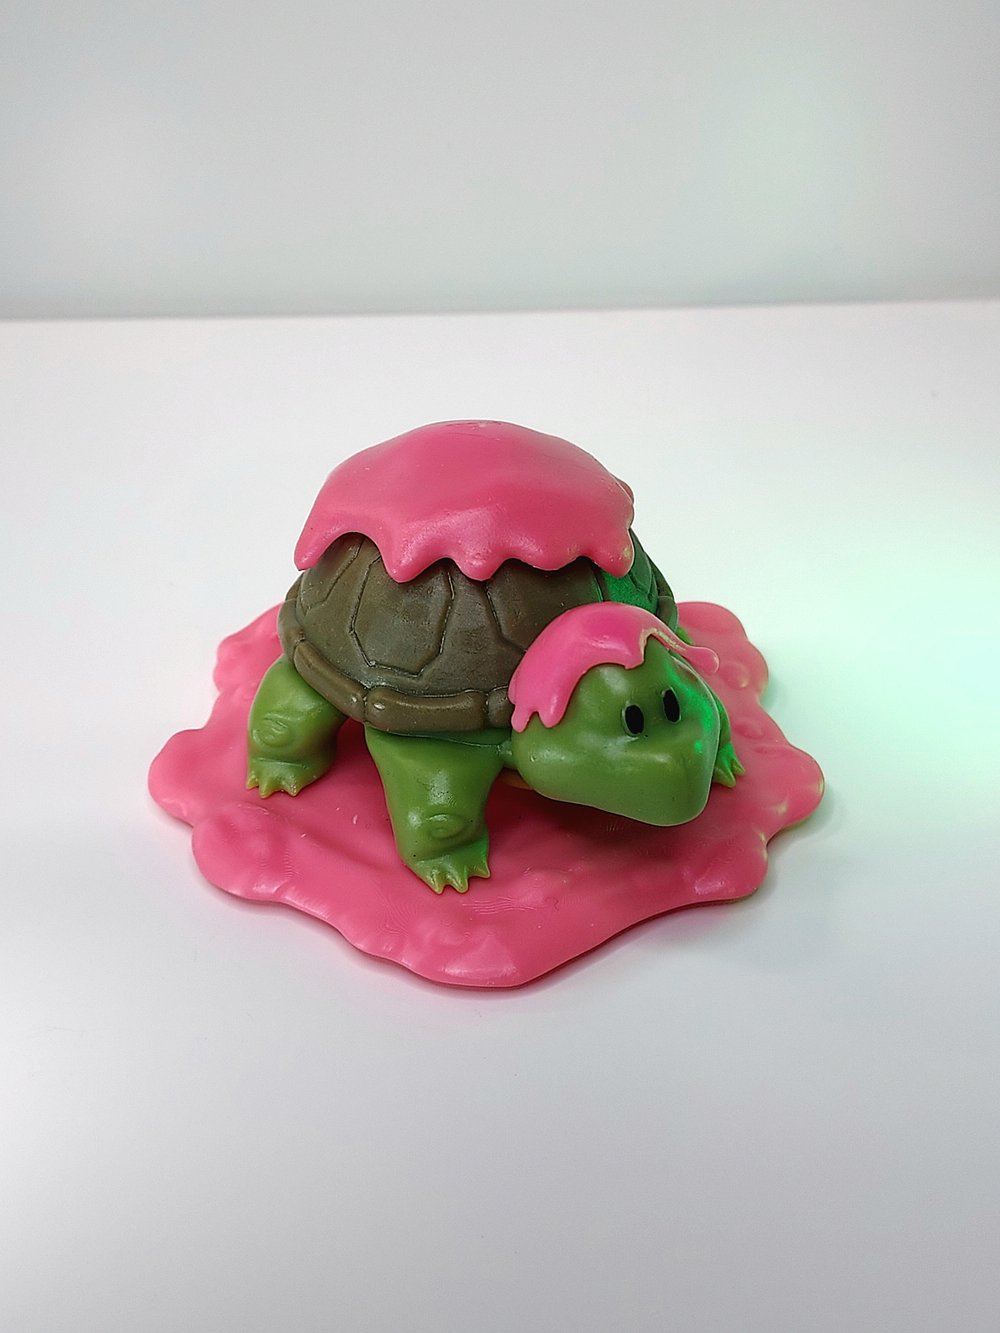 Pre-Mutant Baby Turtles